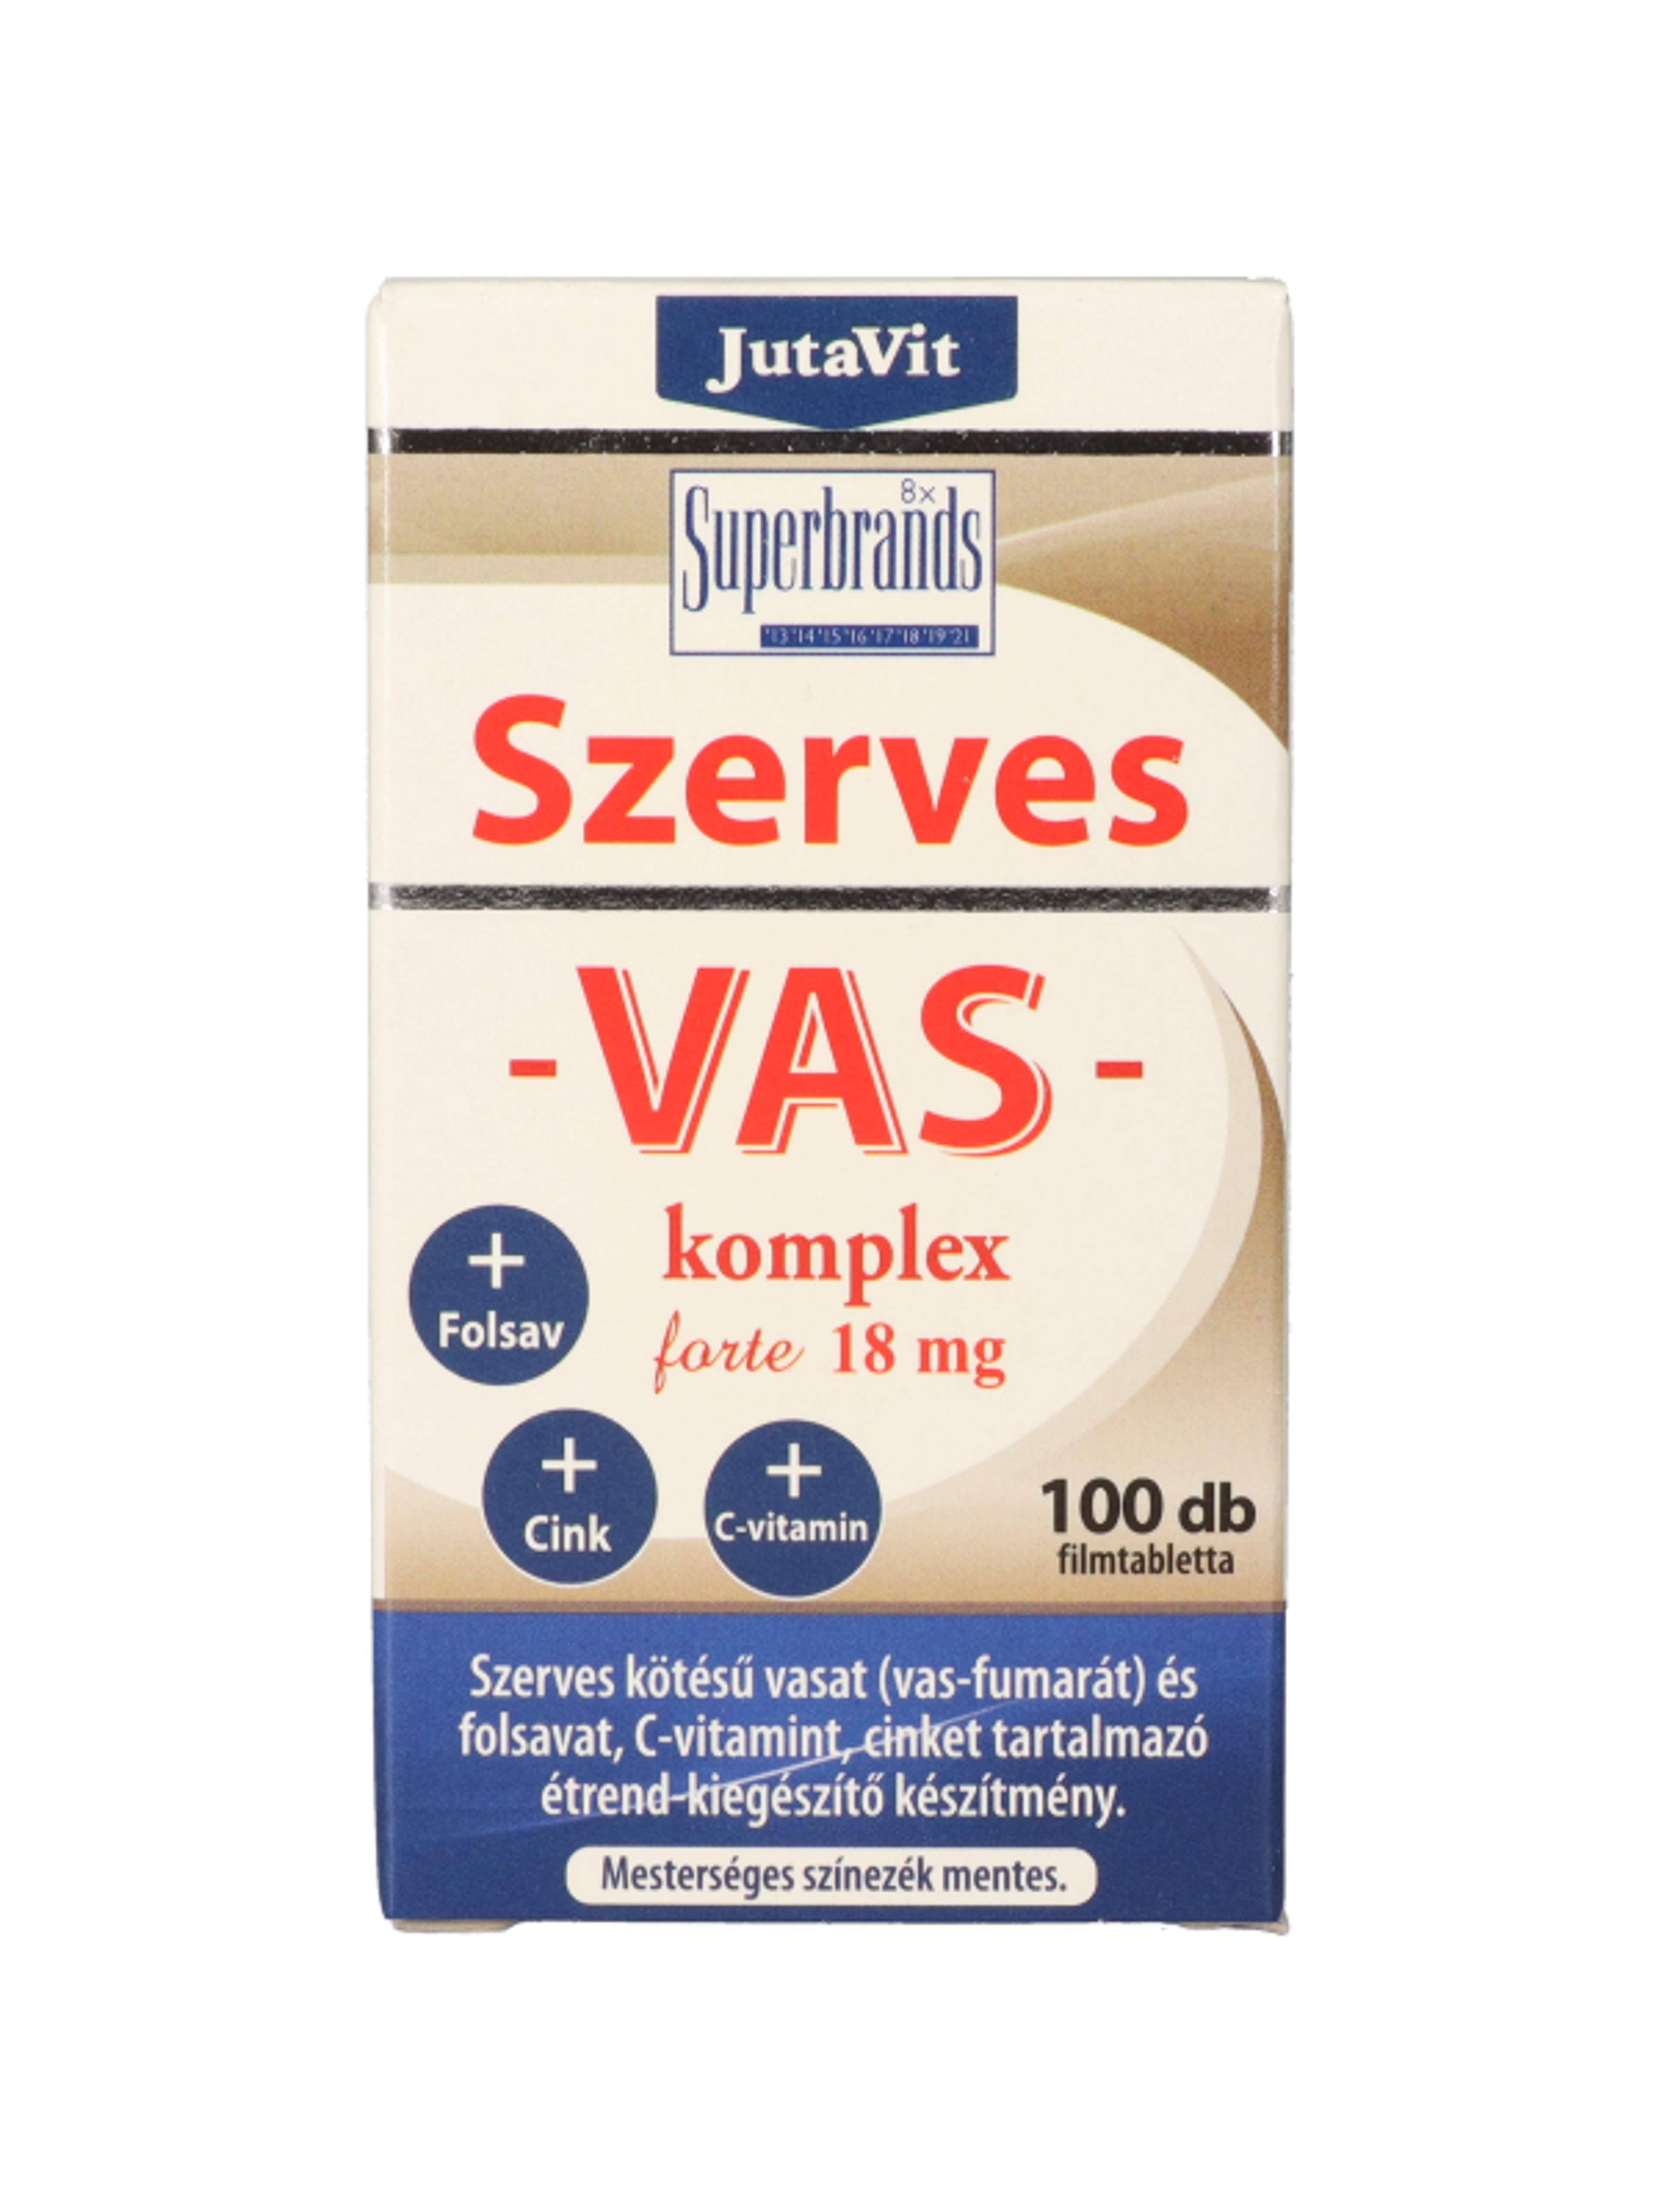 JutaVit Szerves Vas Komplex Forte 18 mg, étrend-kiegészítő filmtabletta - 100 db